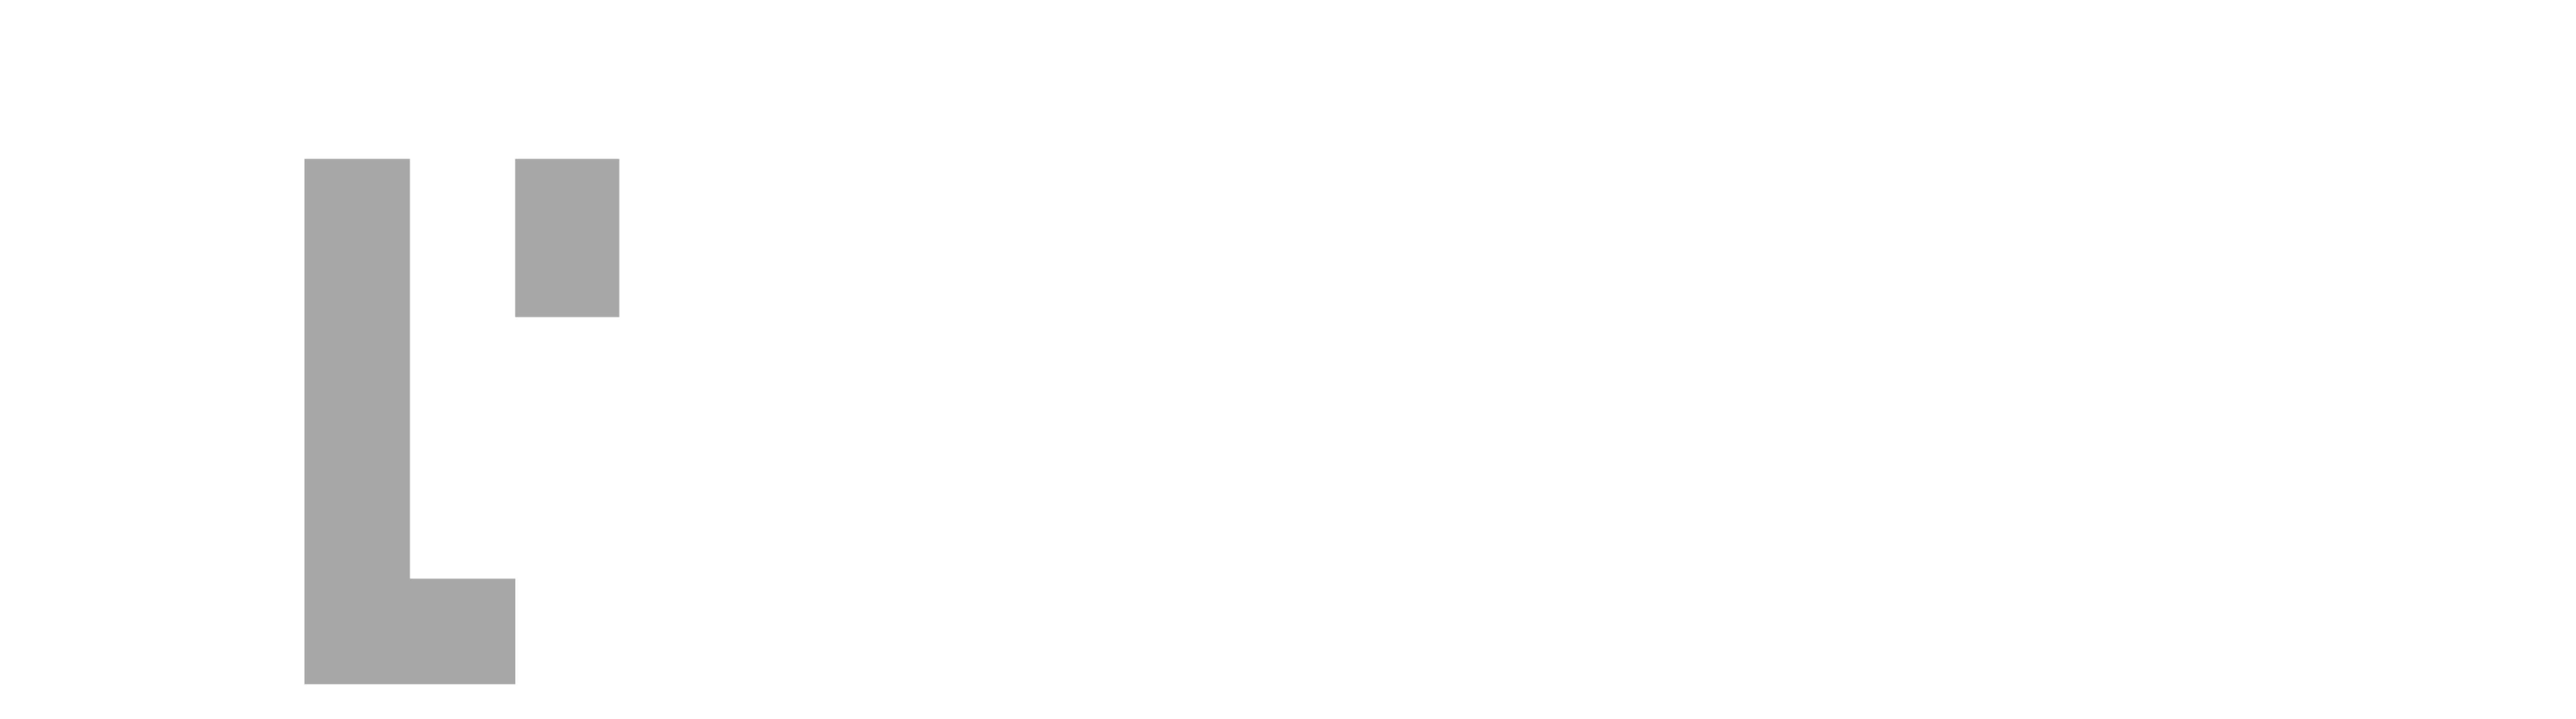 Howe Law